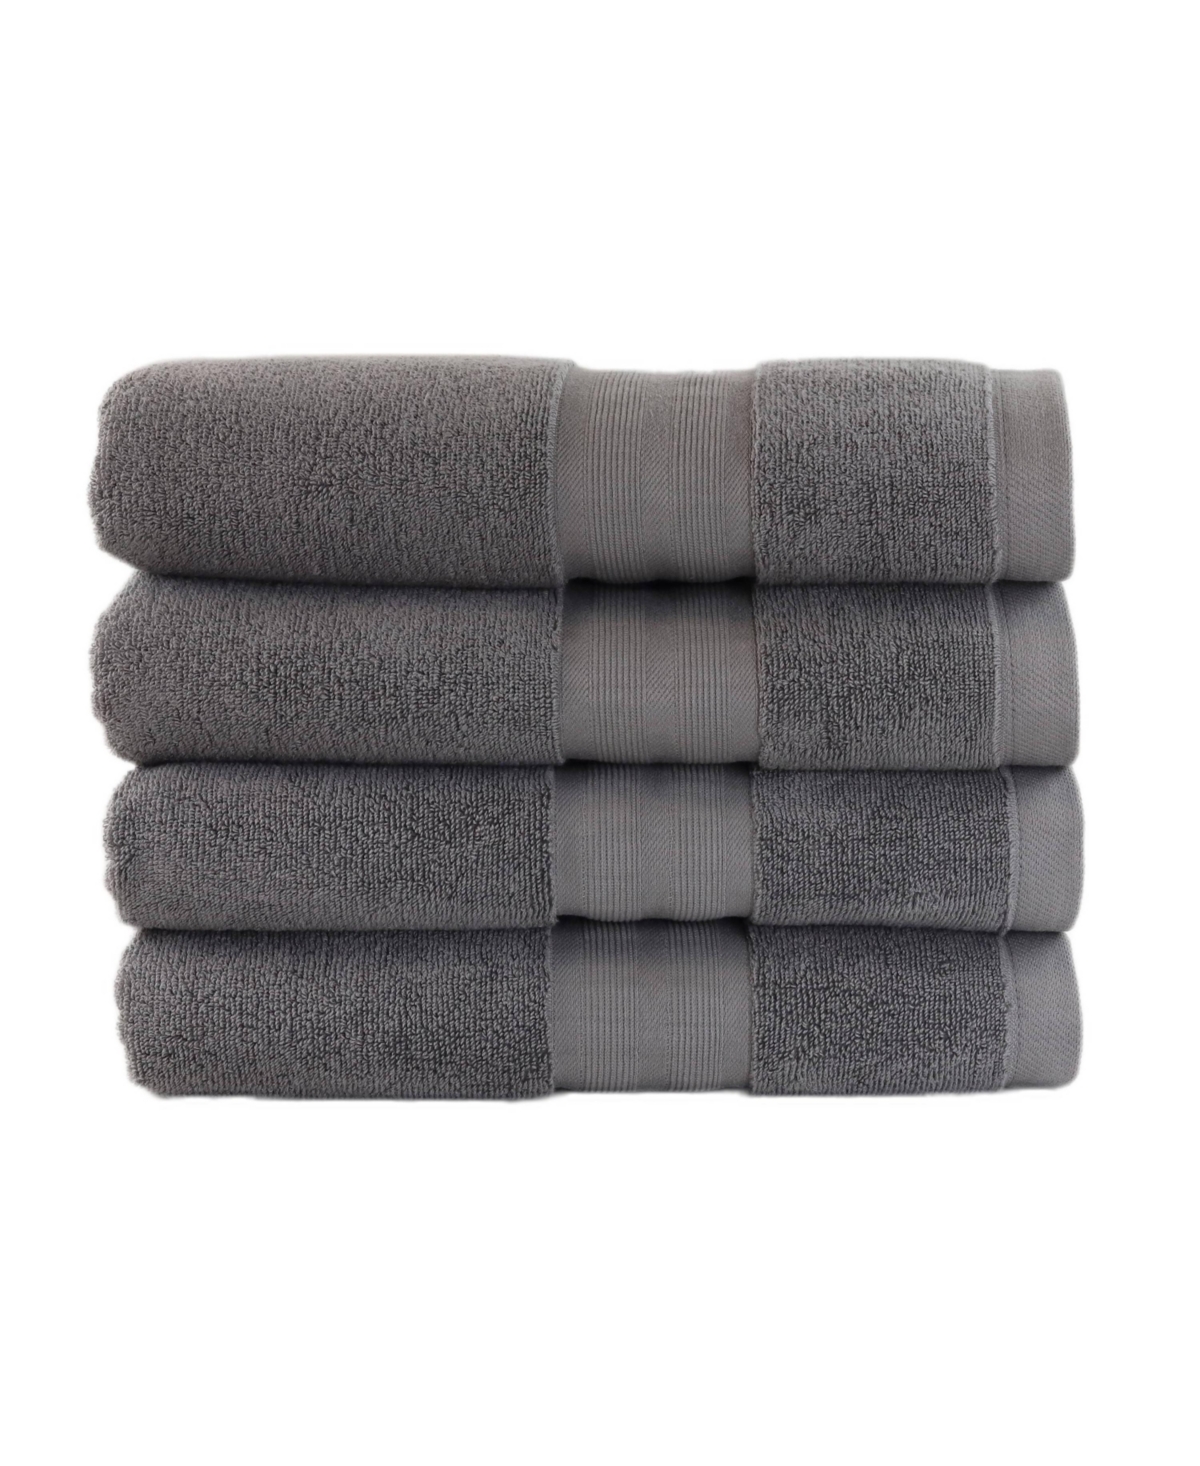 American Heritage 100% Organic Cotton 4-Piece Bath Towel Set